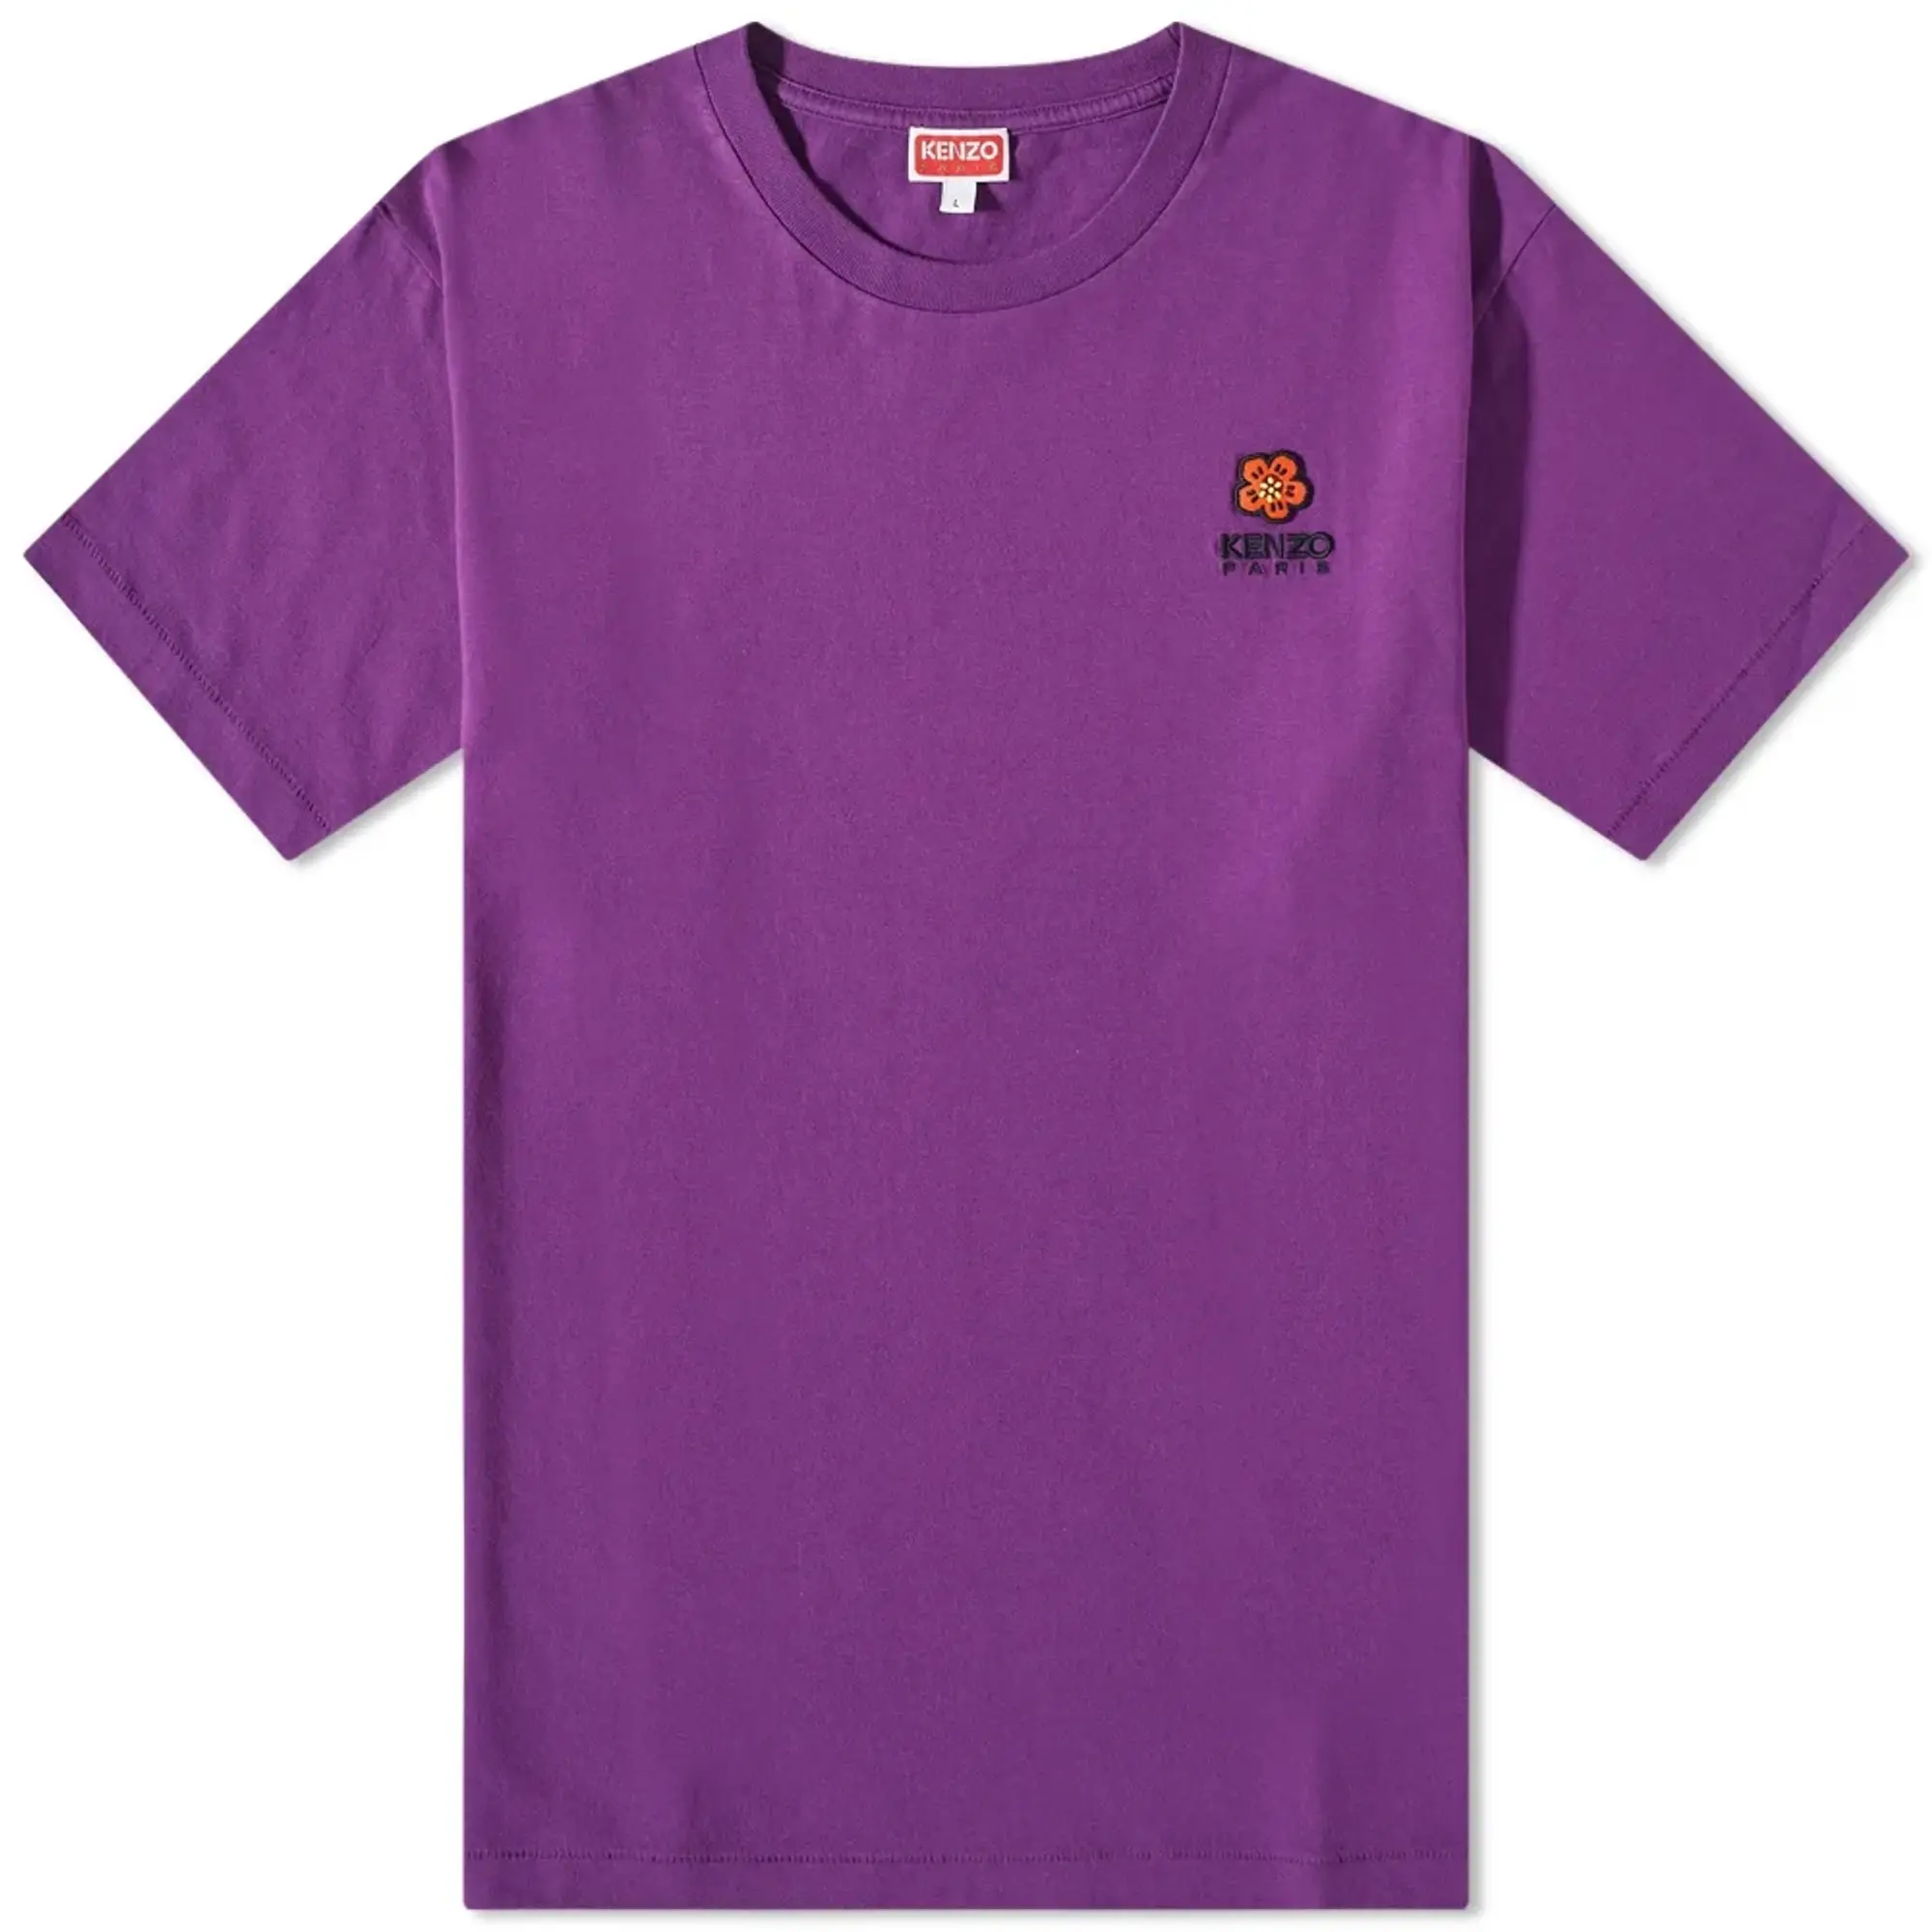 Kenzo Paris Men's Boke Flower Crest T-Shirt Purple